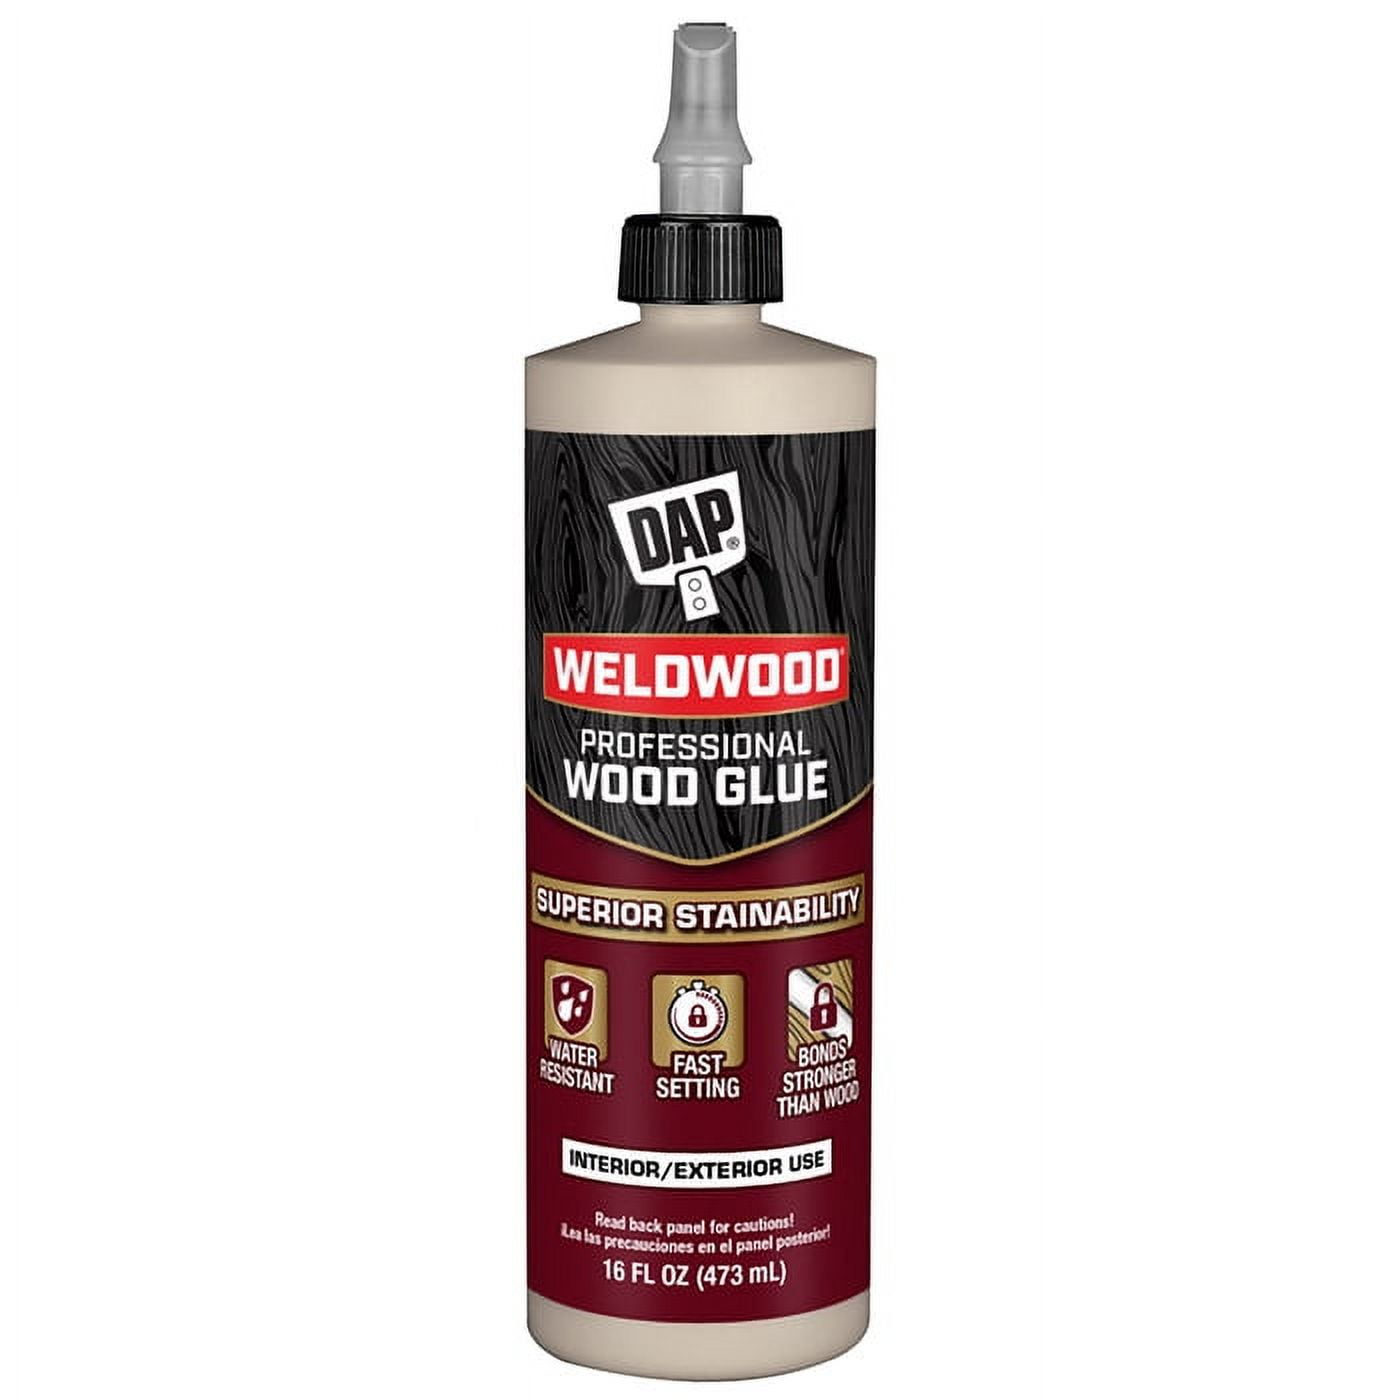 Weldwood Original Wood Glue